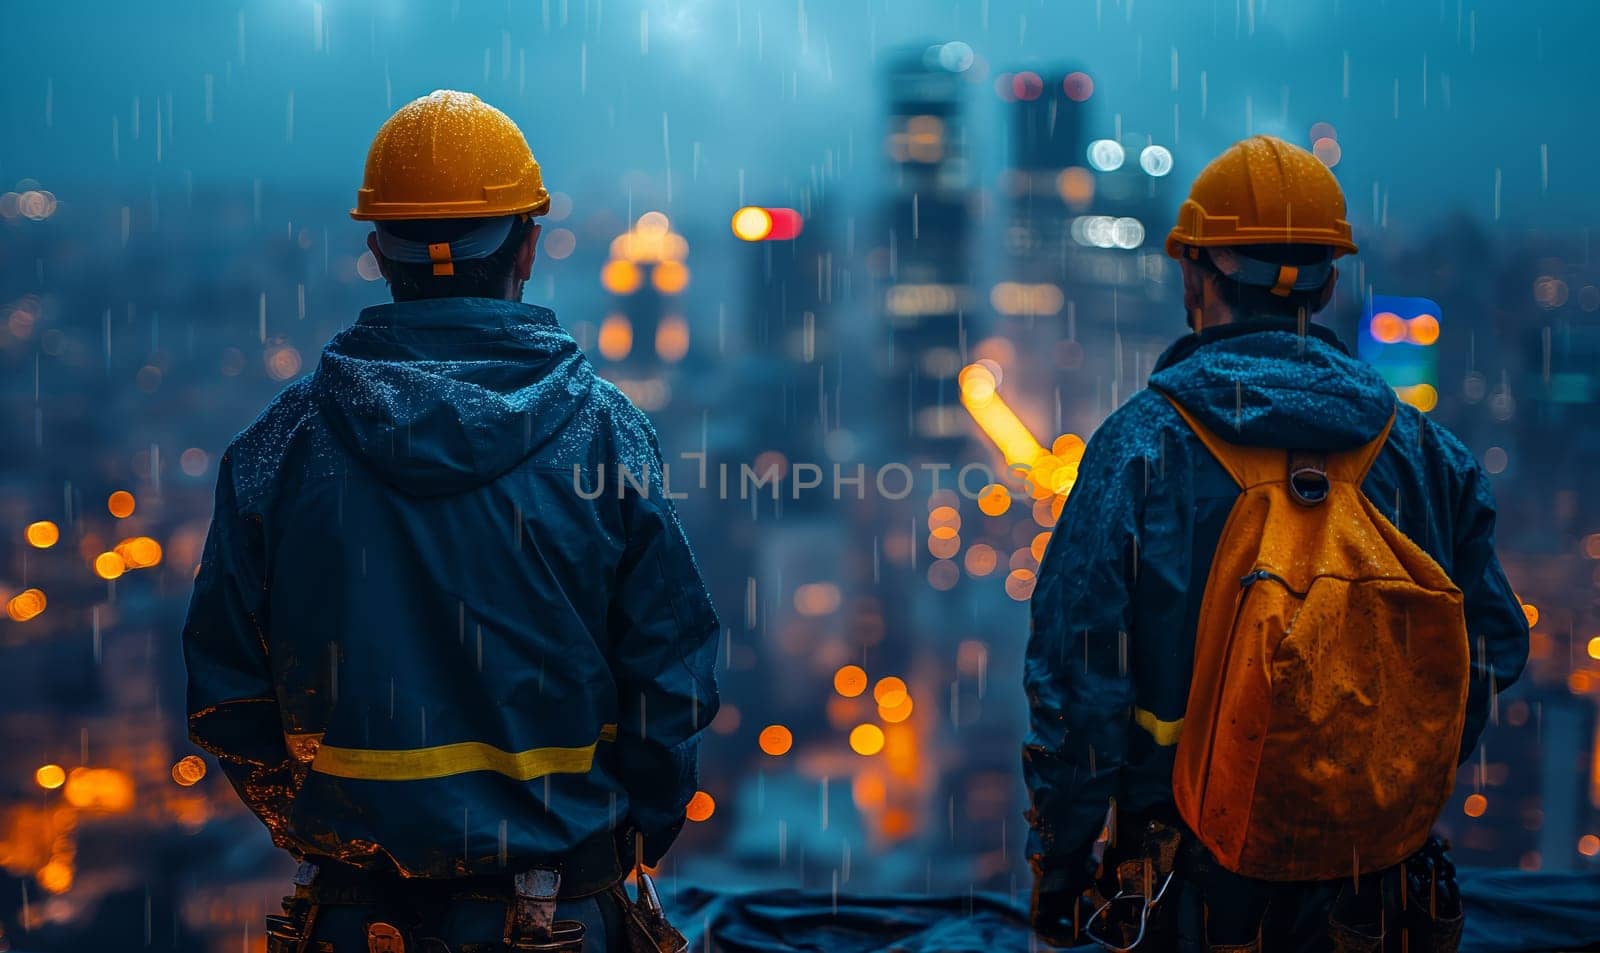 Construction Workers Admiring City in Rain. by Fischeron